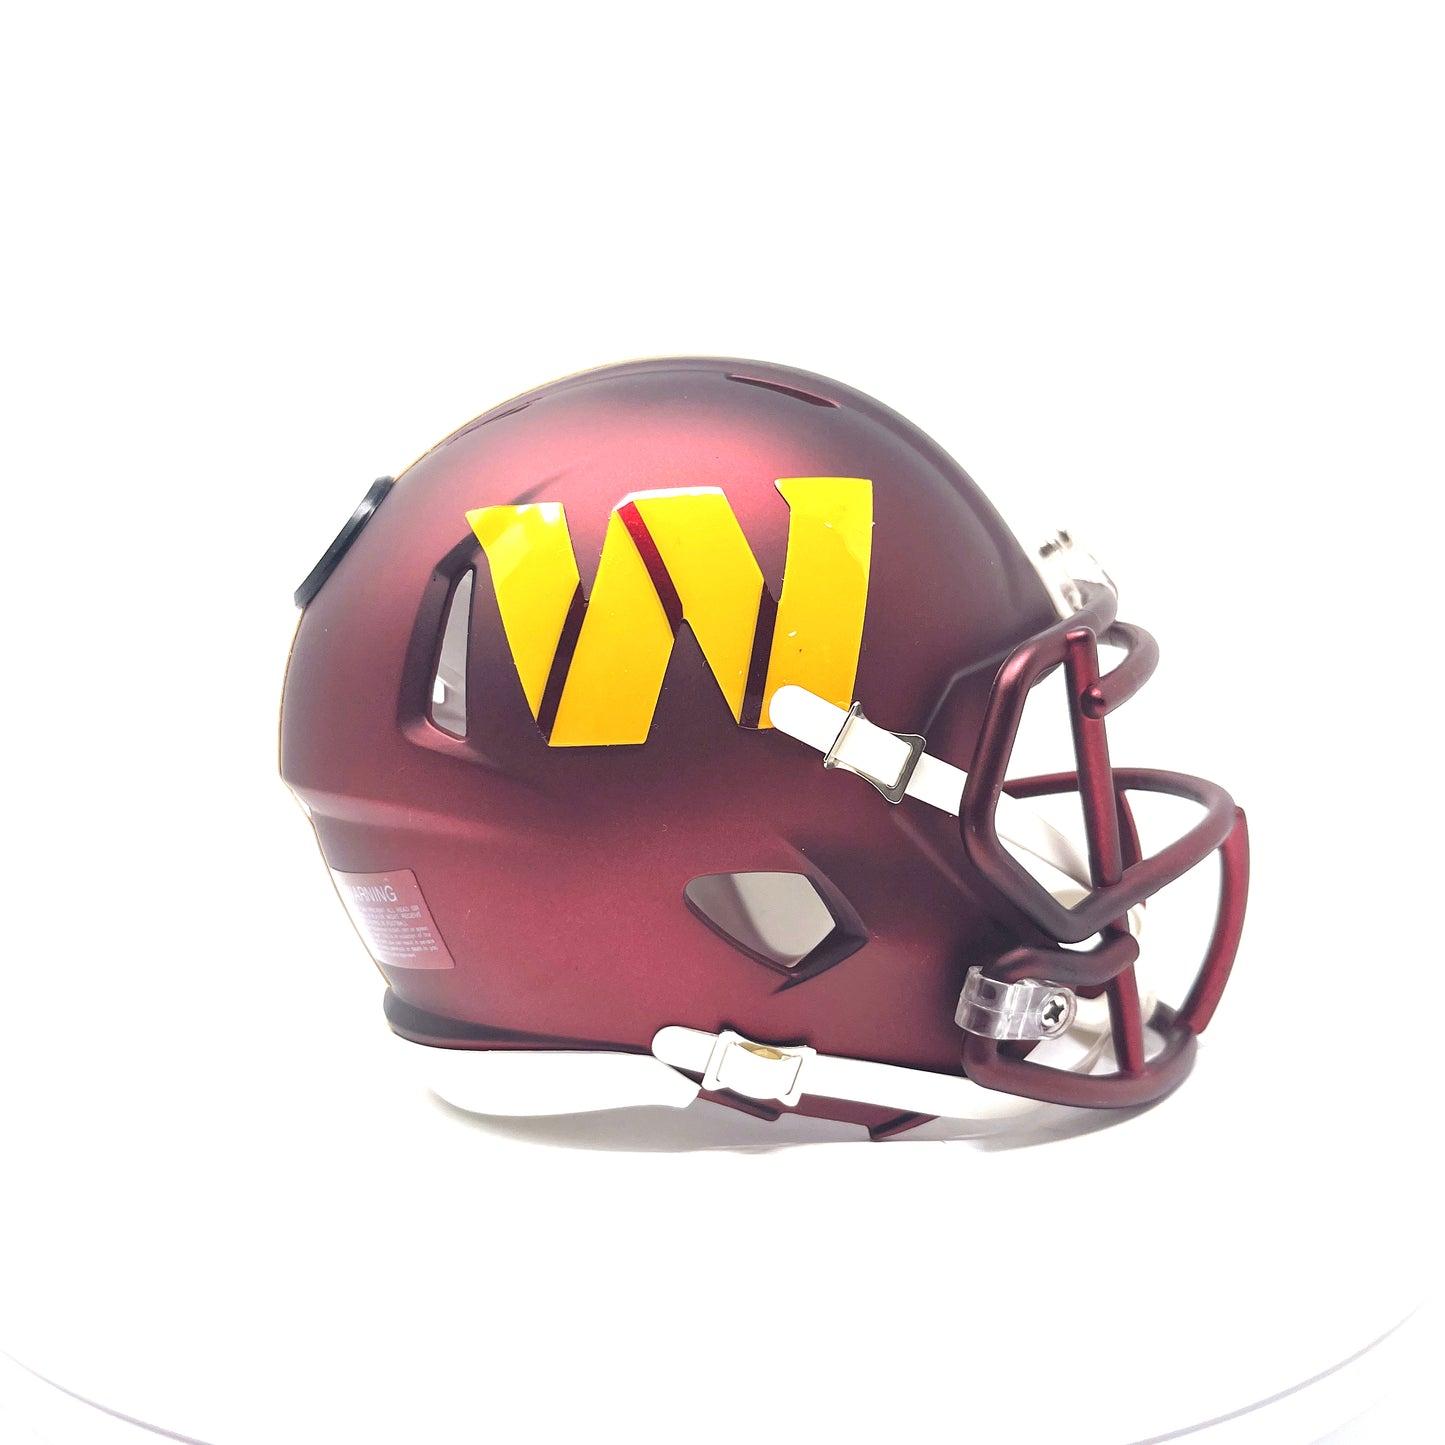 Washington Commanders NFL Collectible Mini Helmet - Picture Inside - FANZ Collectibles